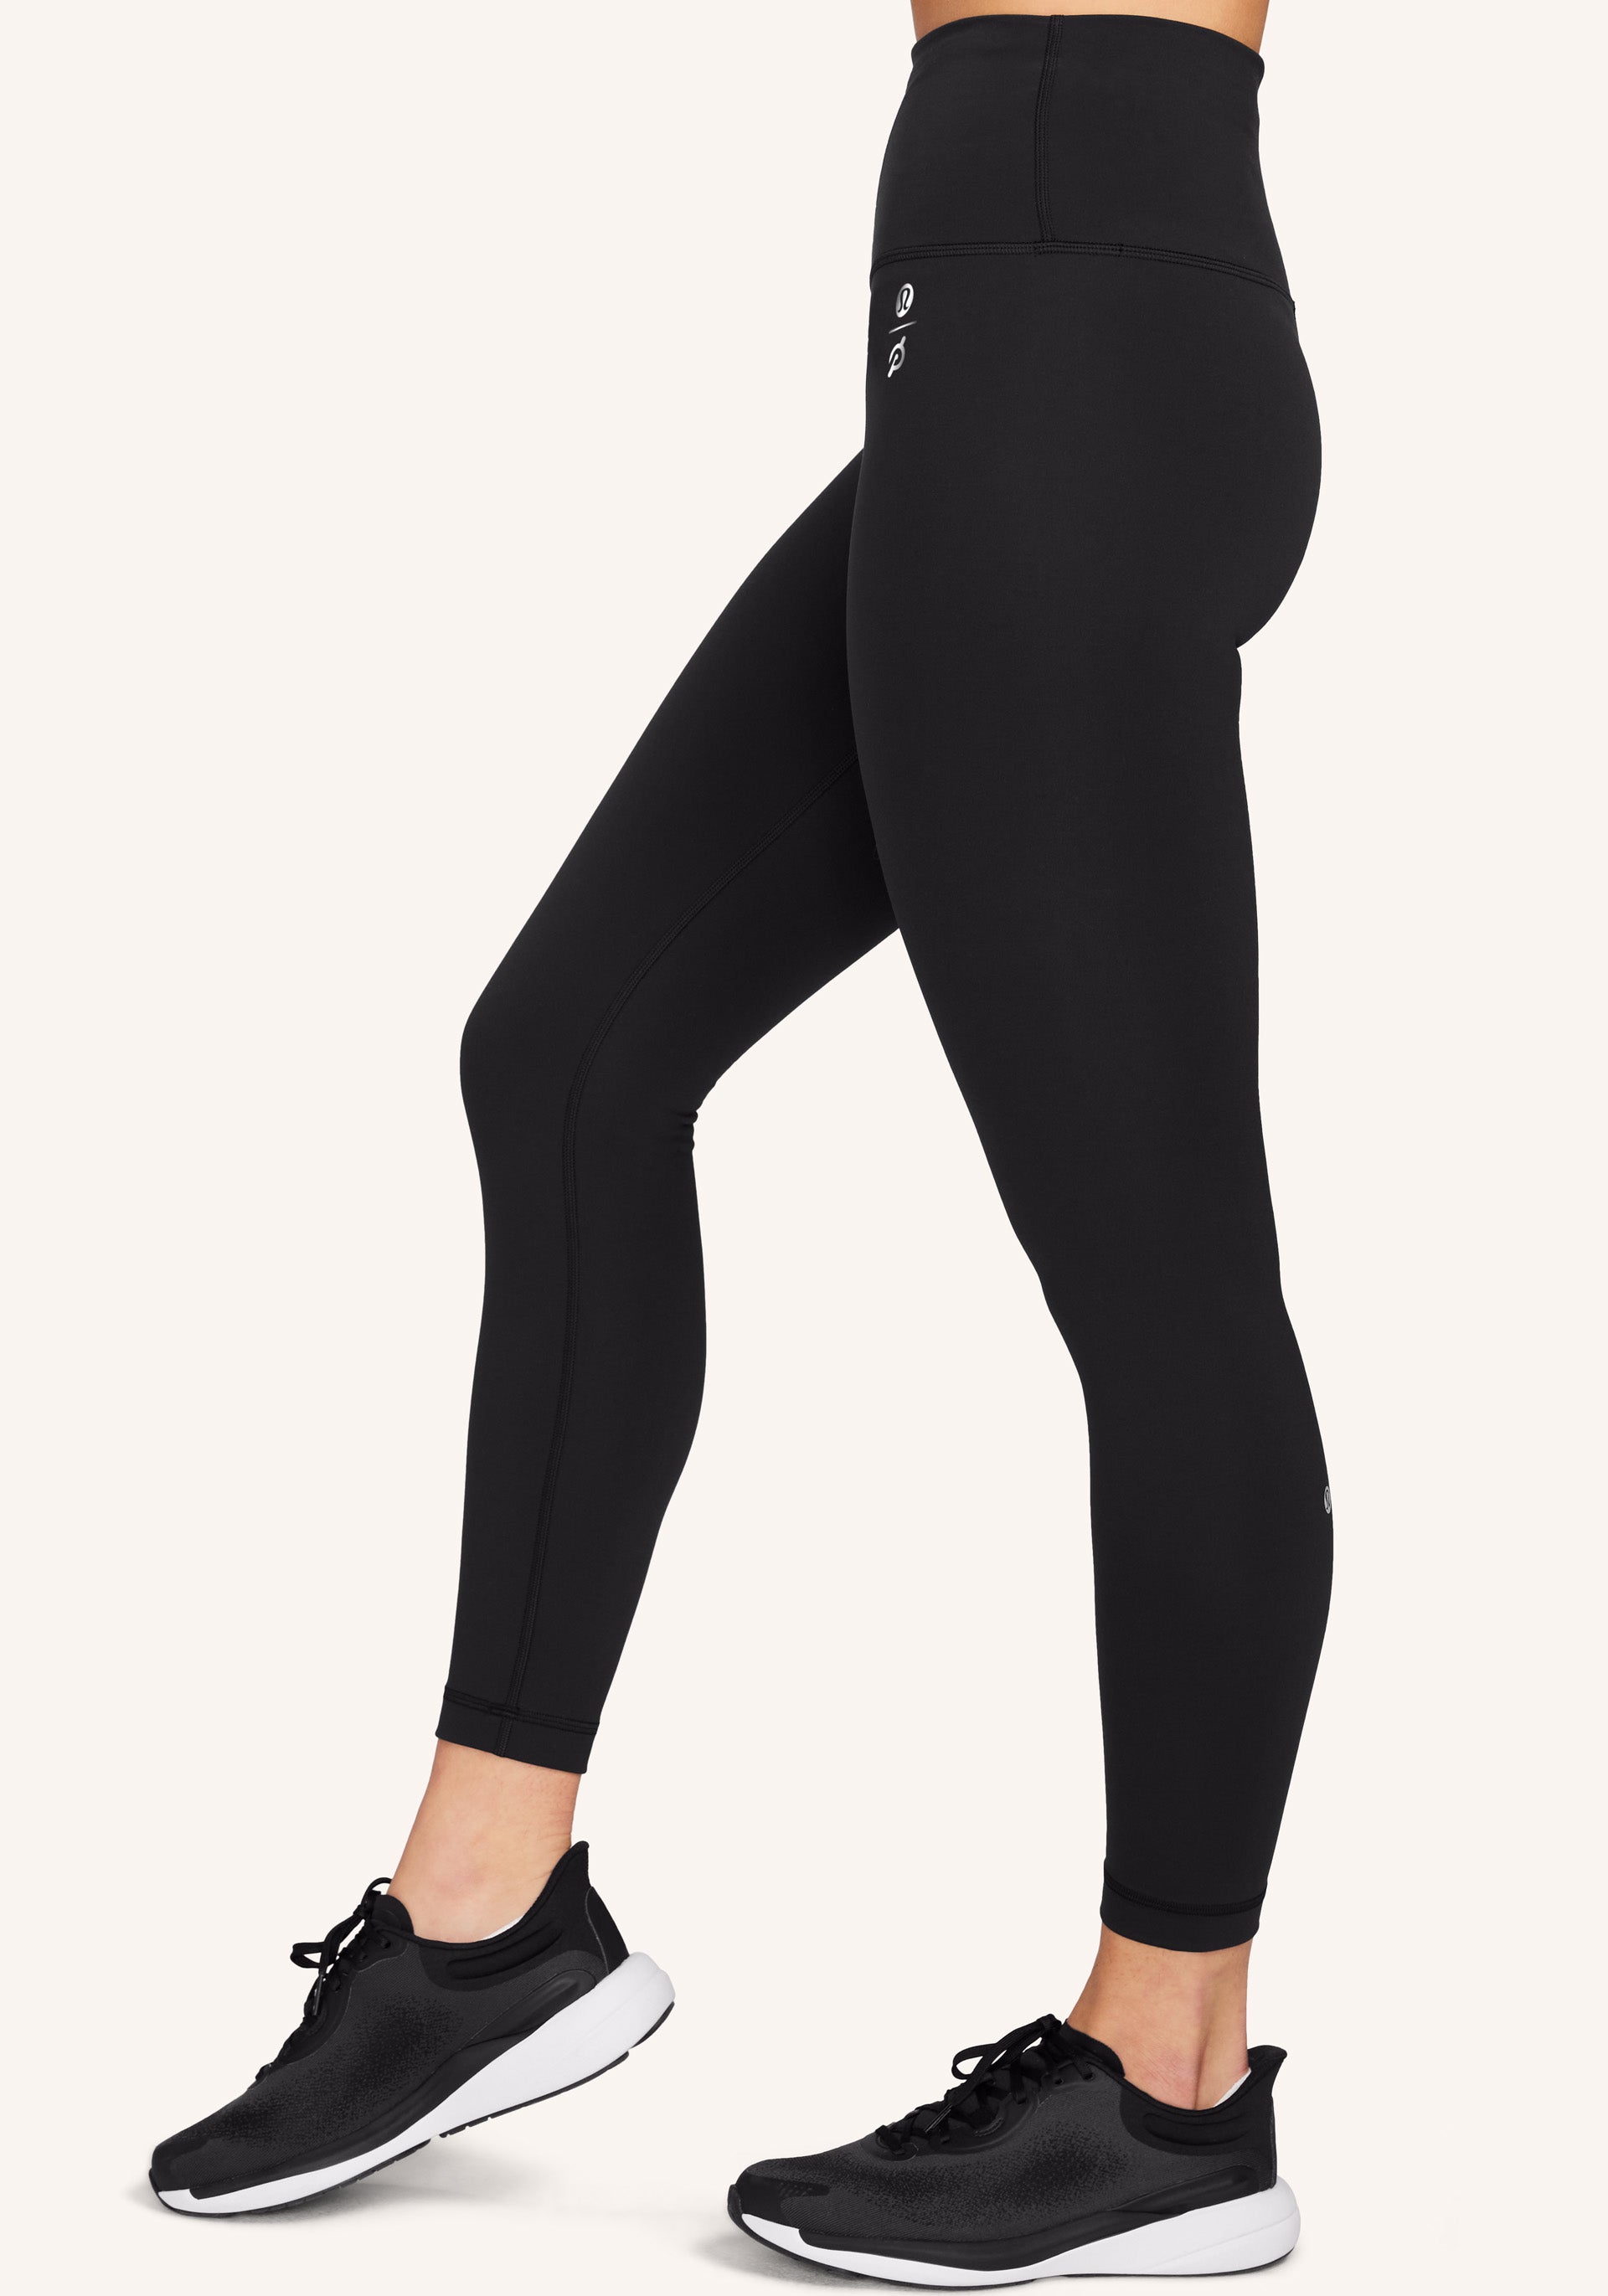 Lululemon Women's Black Leggings Yoga Pants Size 10